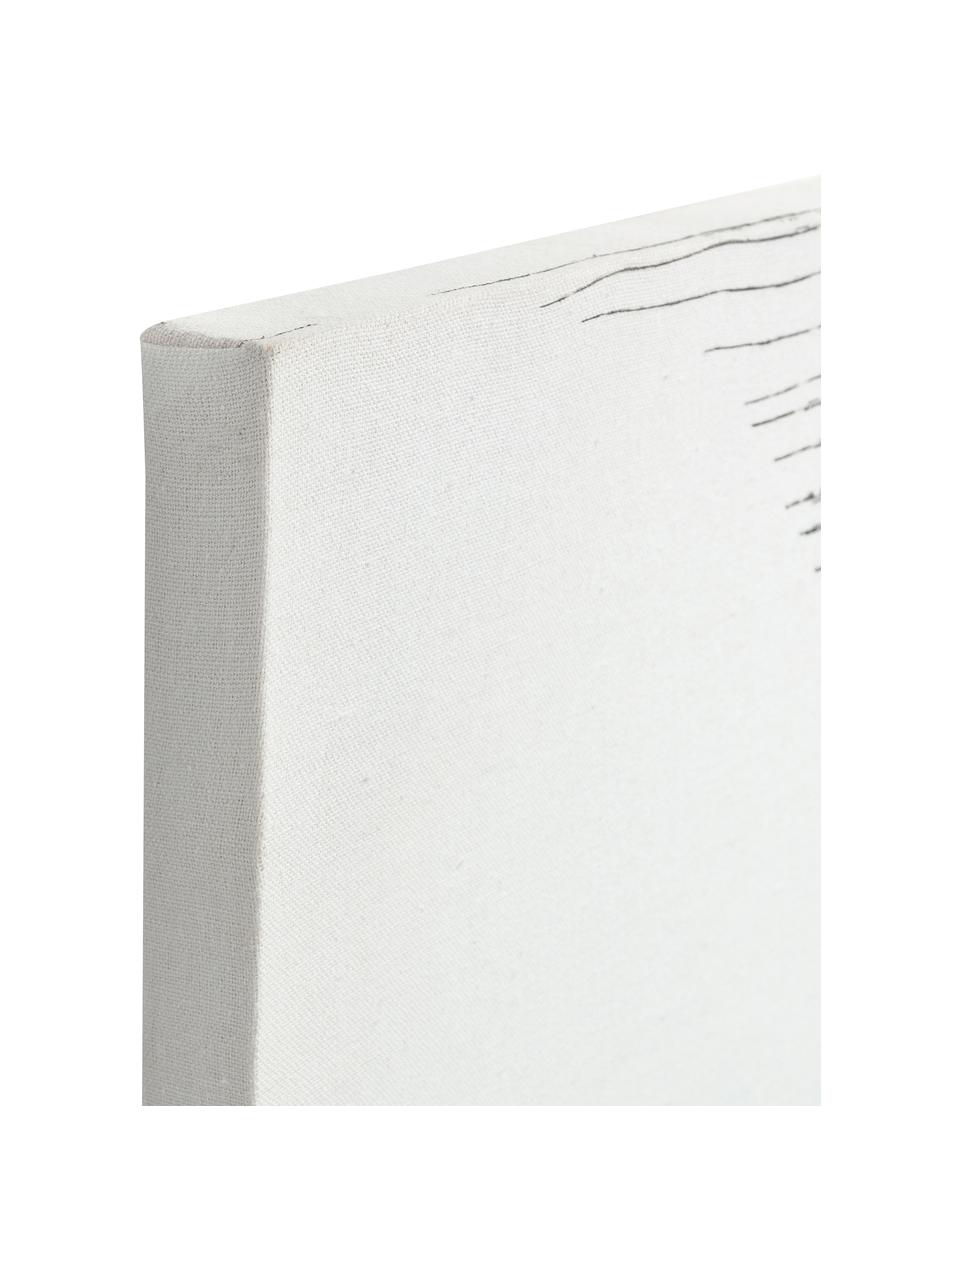 Leinwanddruck Prisma, Bild: Leinwand, Weiss, Schwarz, B 50 x H 50 cm